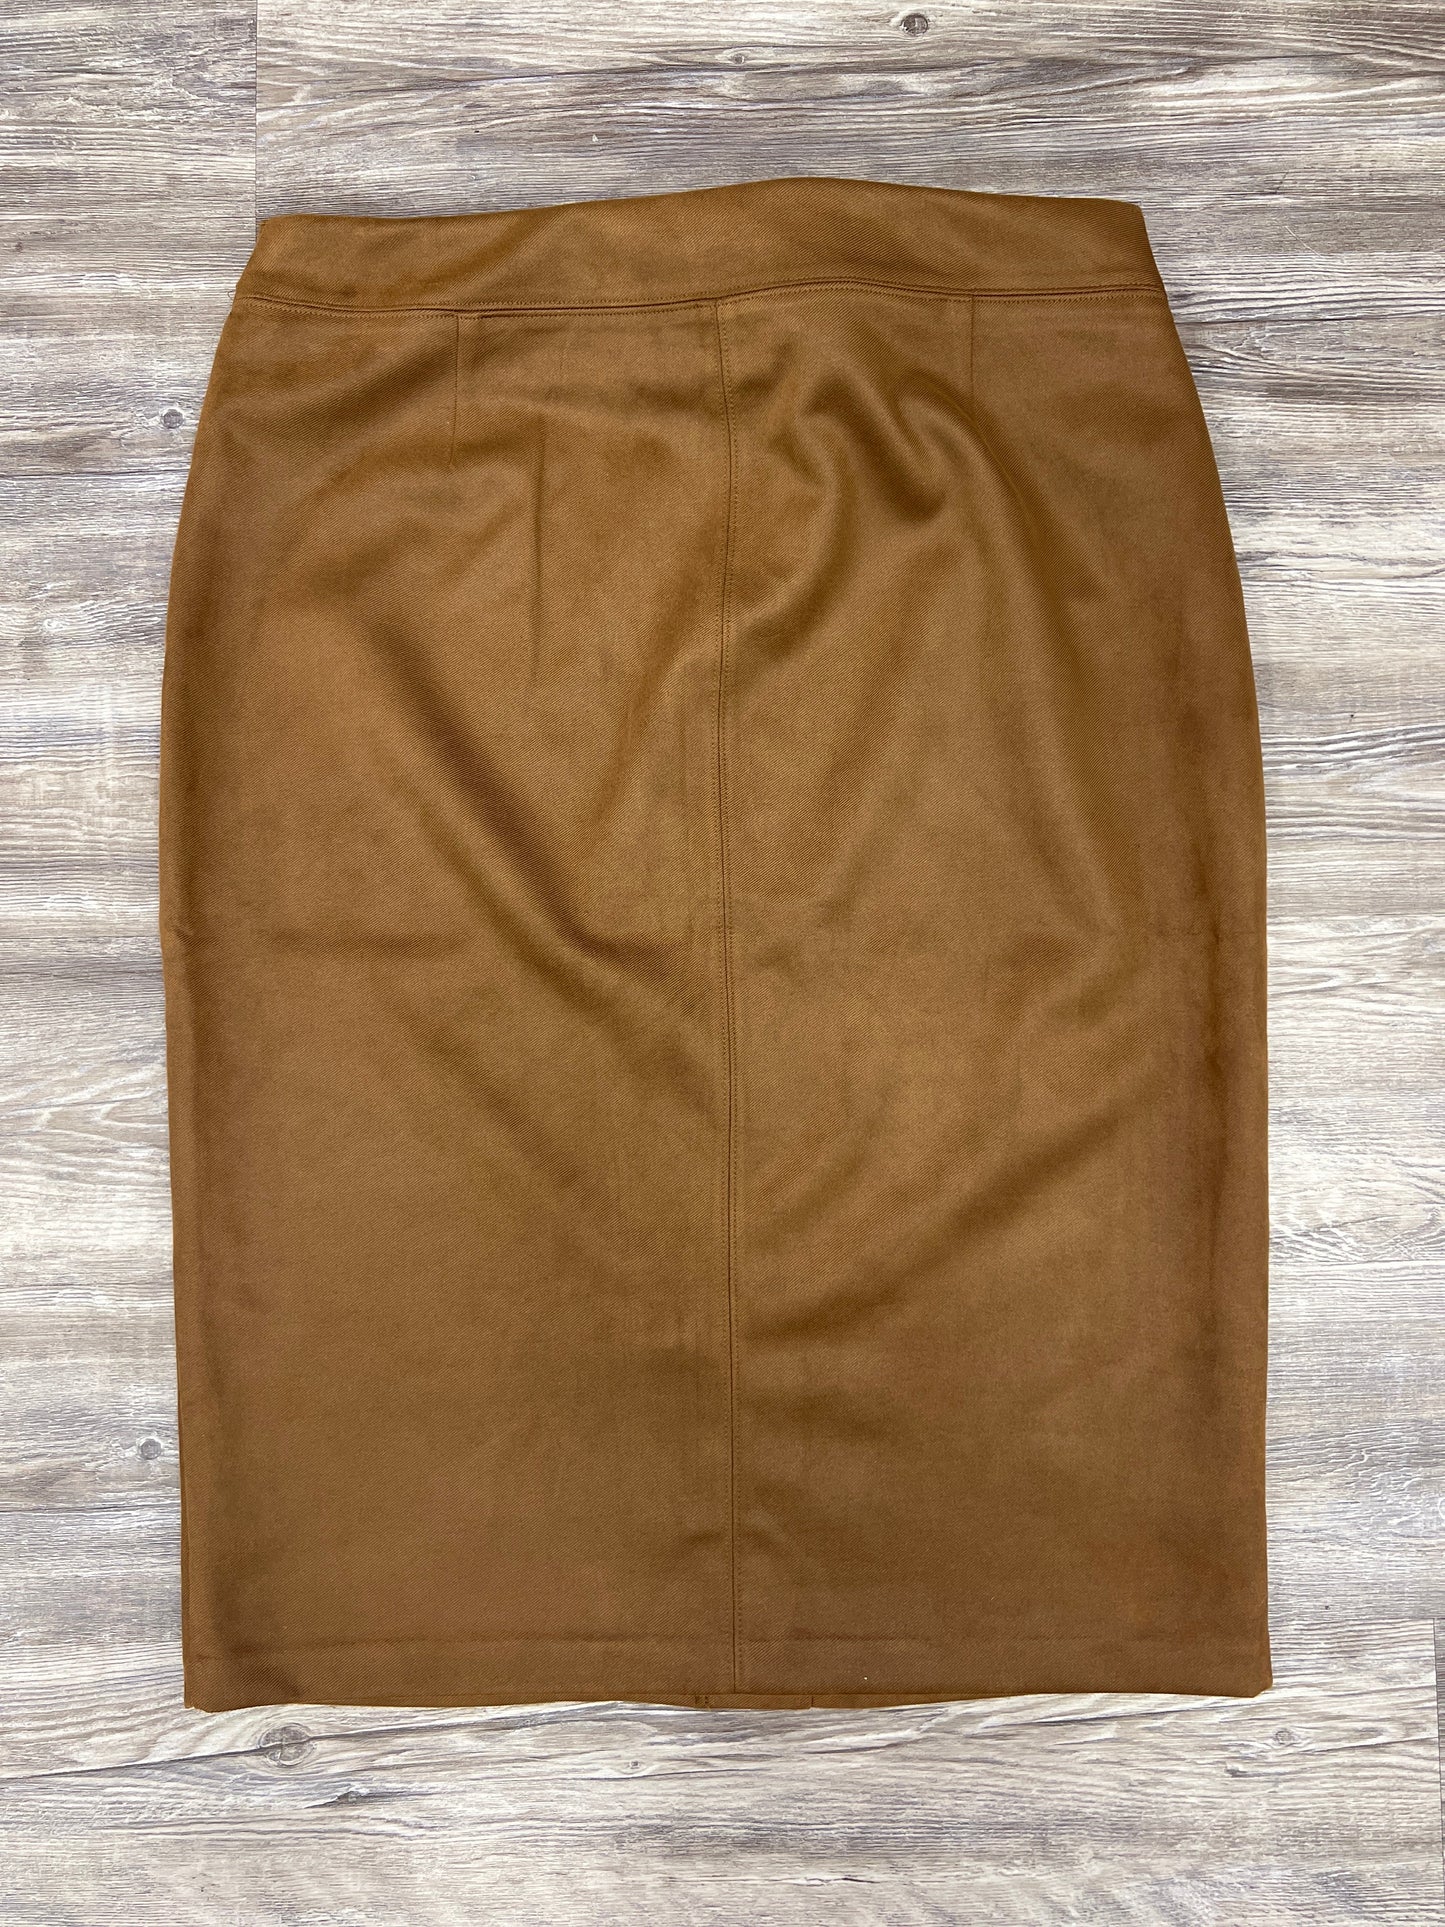 Skirt Midi By Marc New York Size: XL